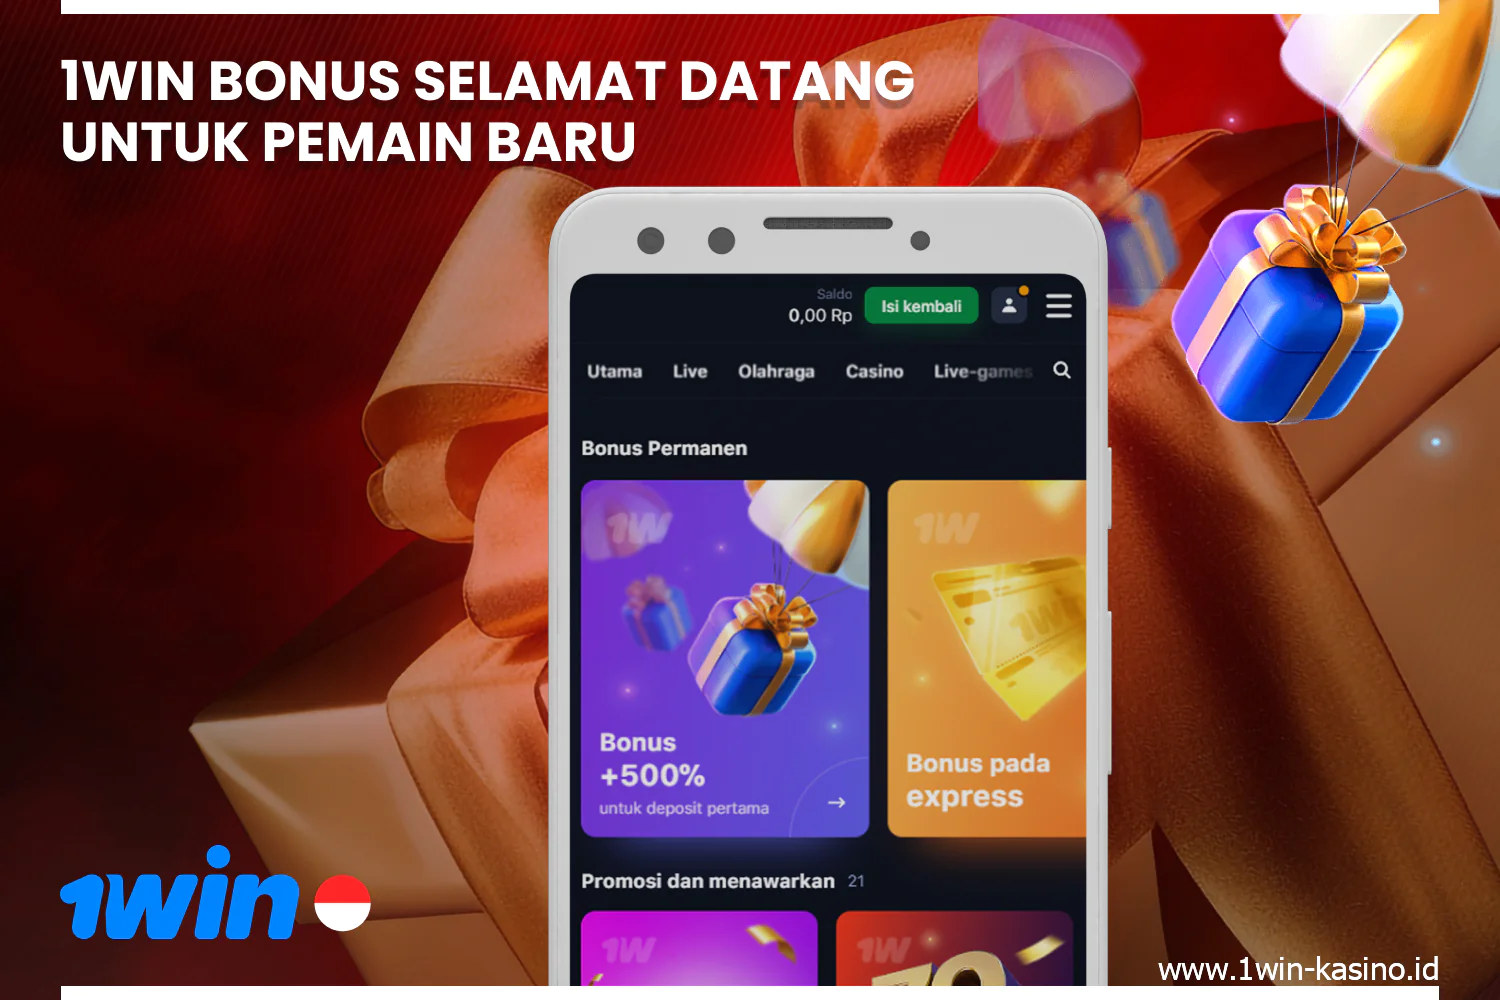 Pemain baru dari Indonesia yang mendaftar dengan 1win dan melakukan deposit pertama dapat memanfaatkan bonus sambutan